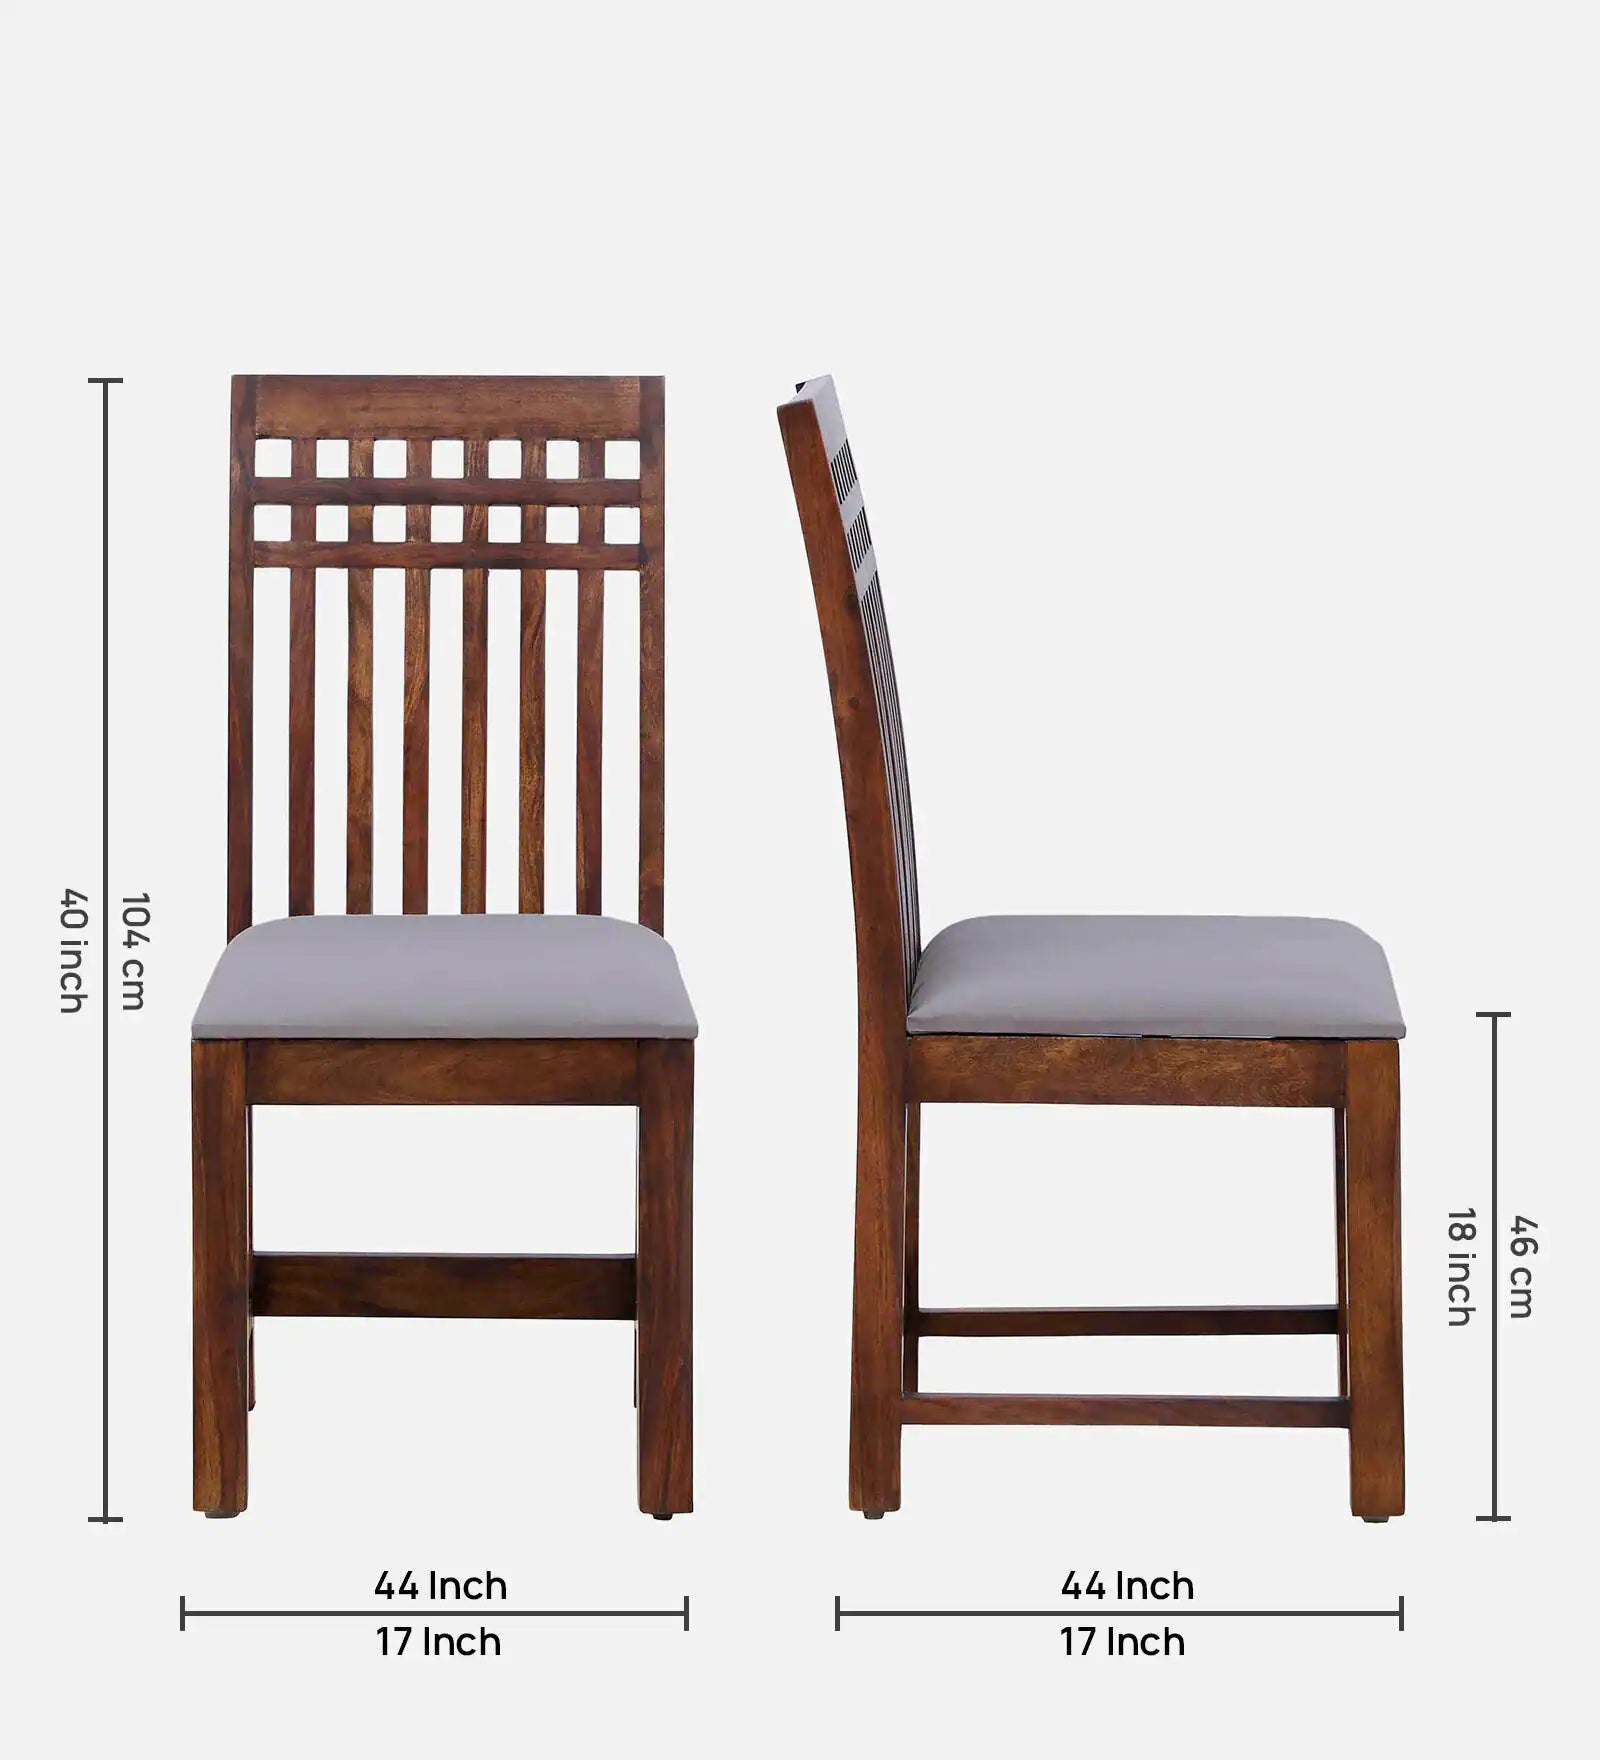 Oasis Solid Wood 4 Seater Dining Set With Chair In Provincial Teak Finish - By Rajwada - Rajwada Furnish